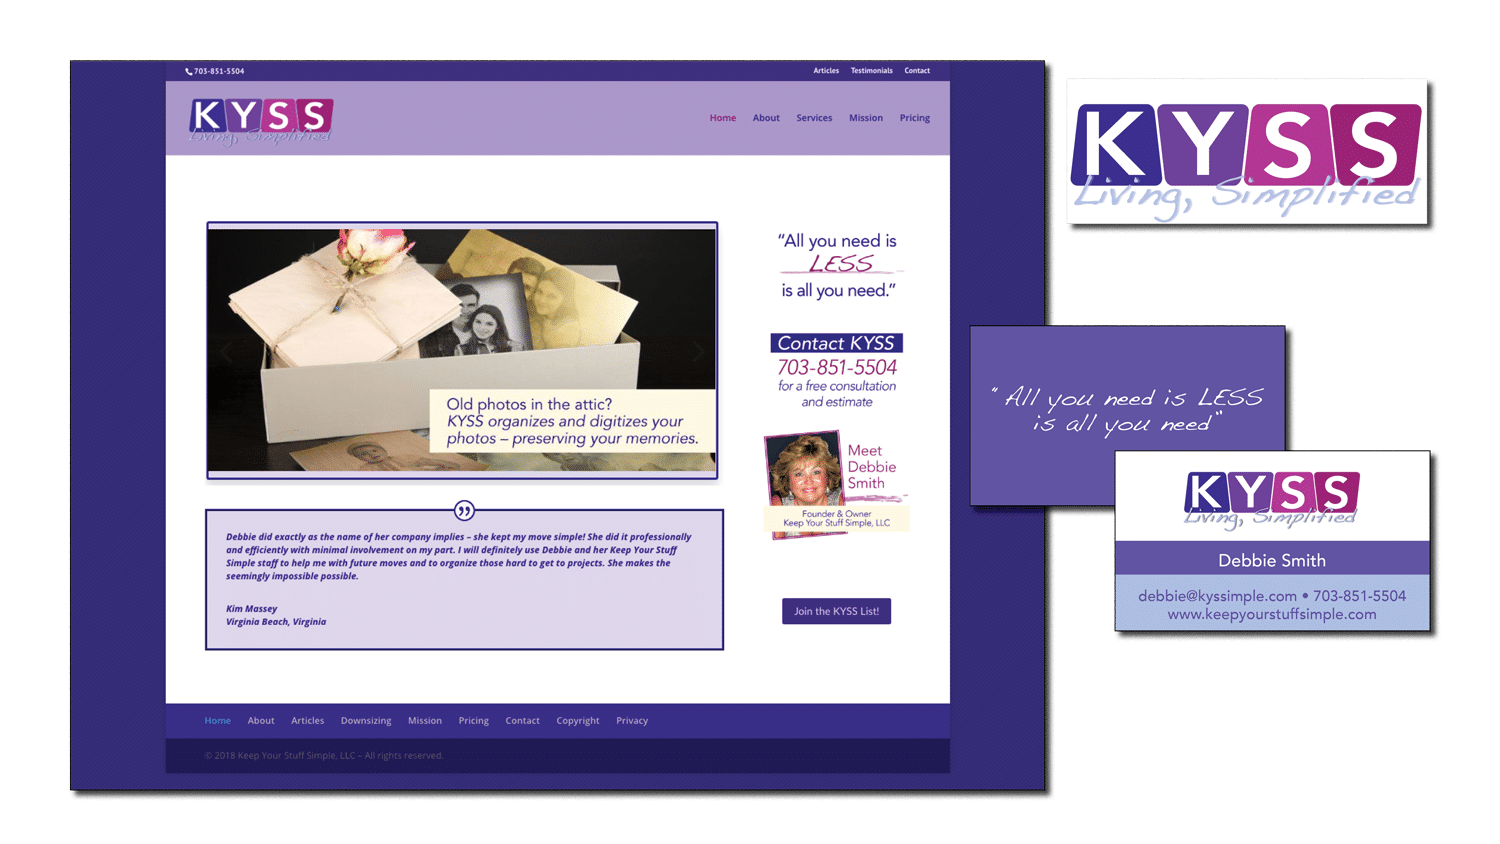 KYSS Identity & Website